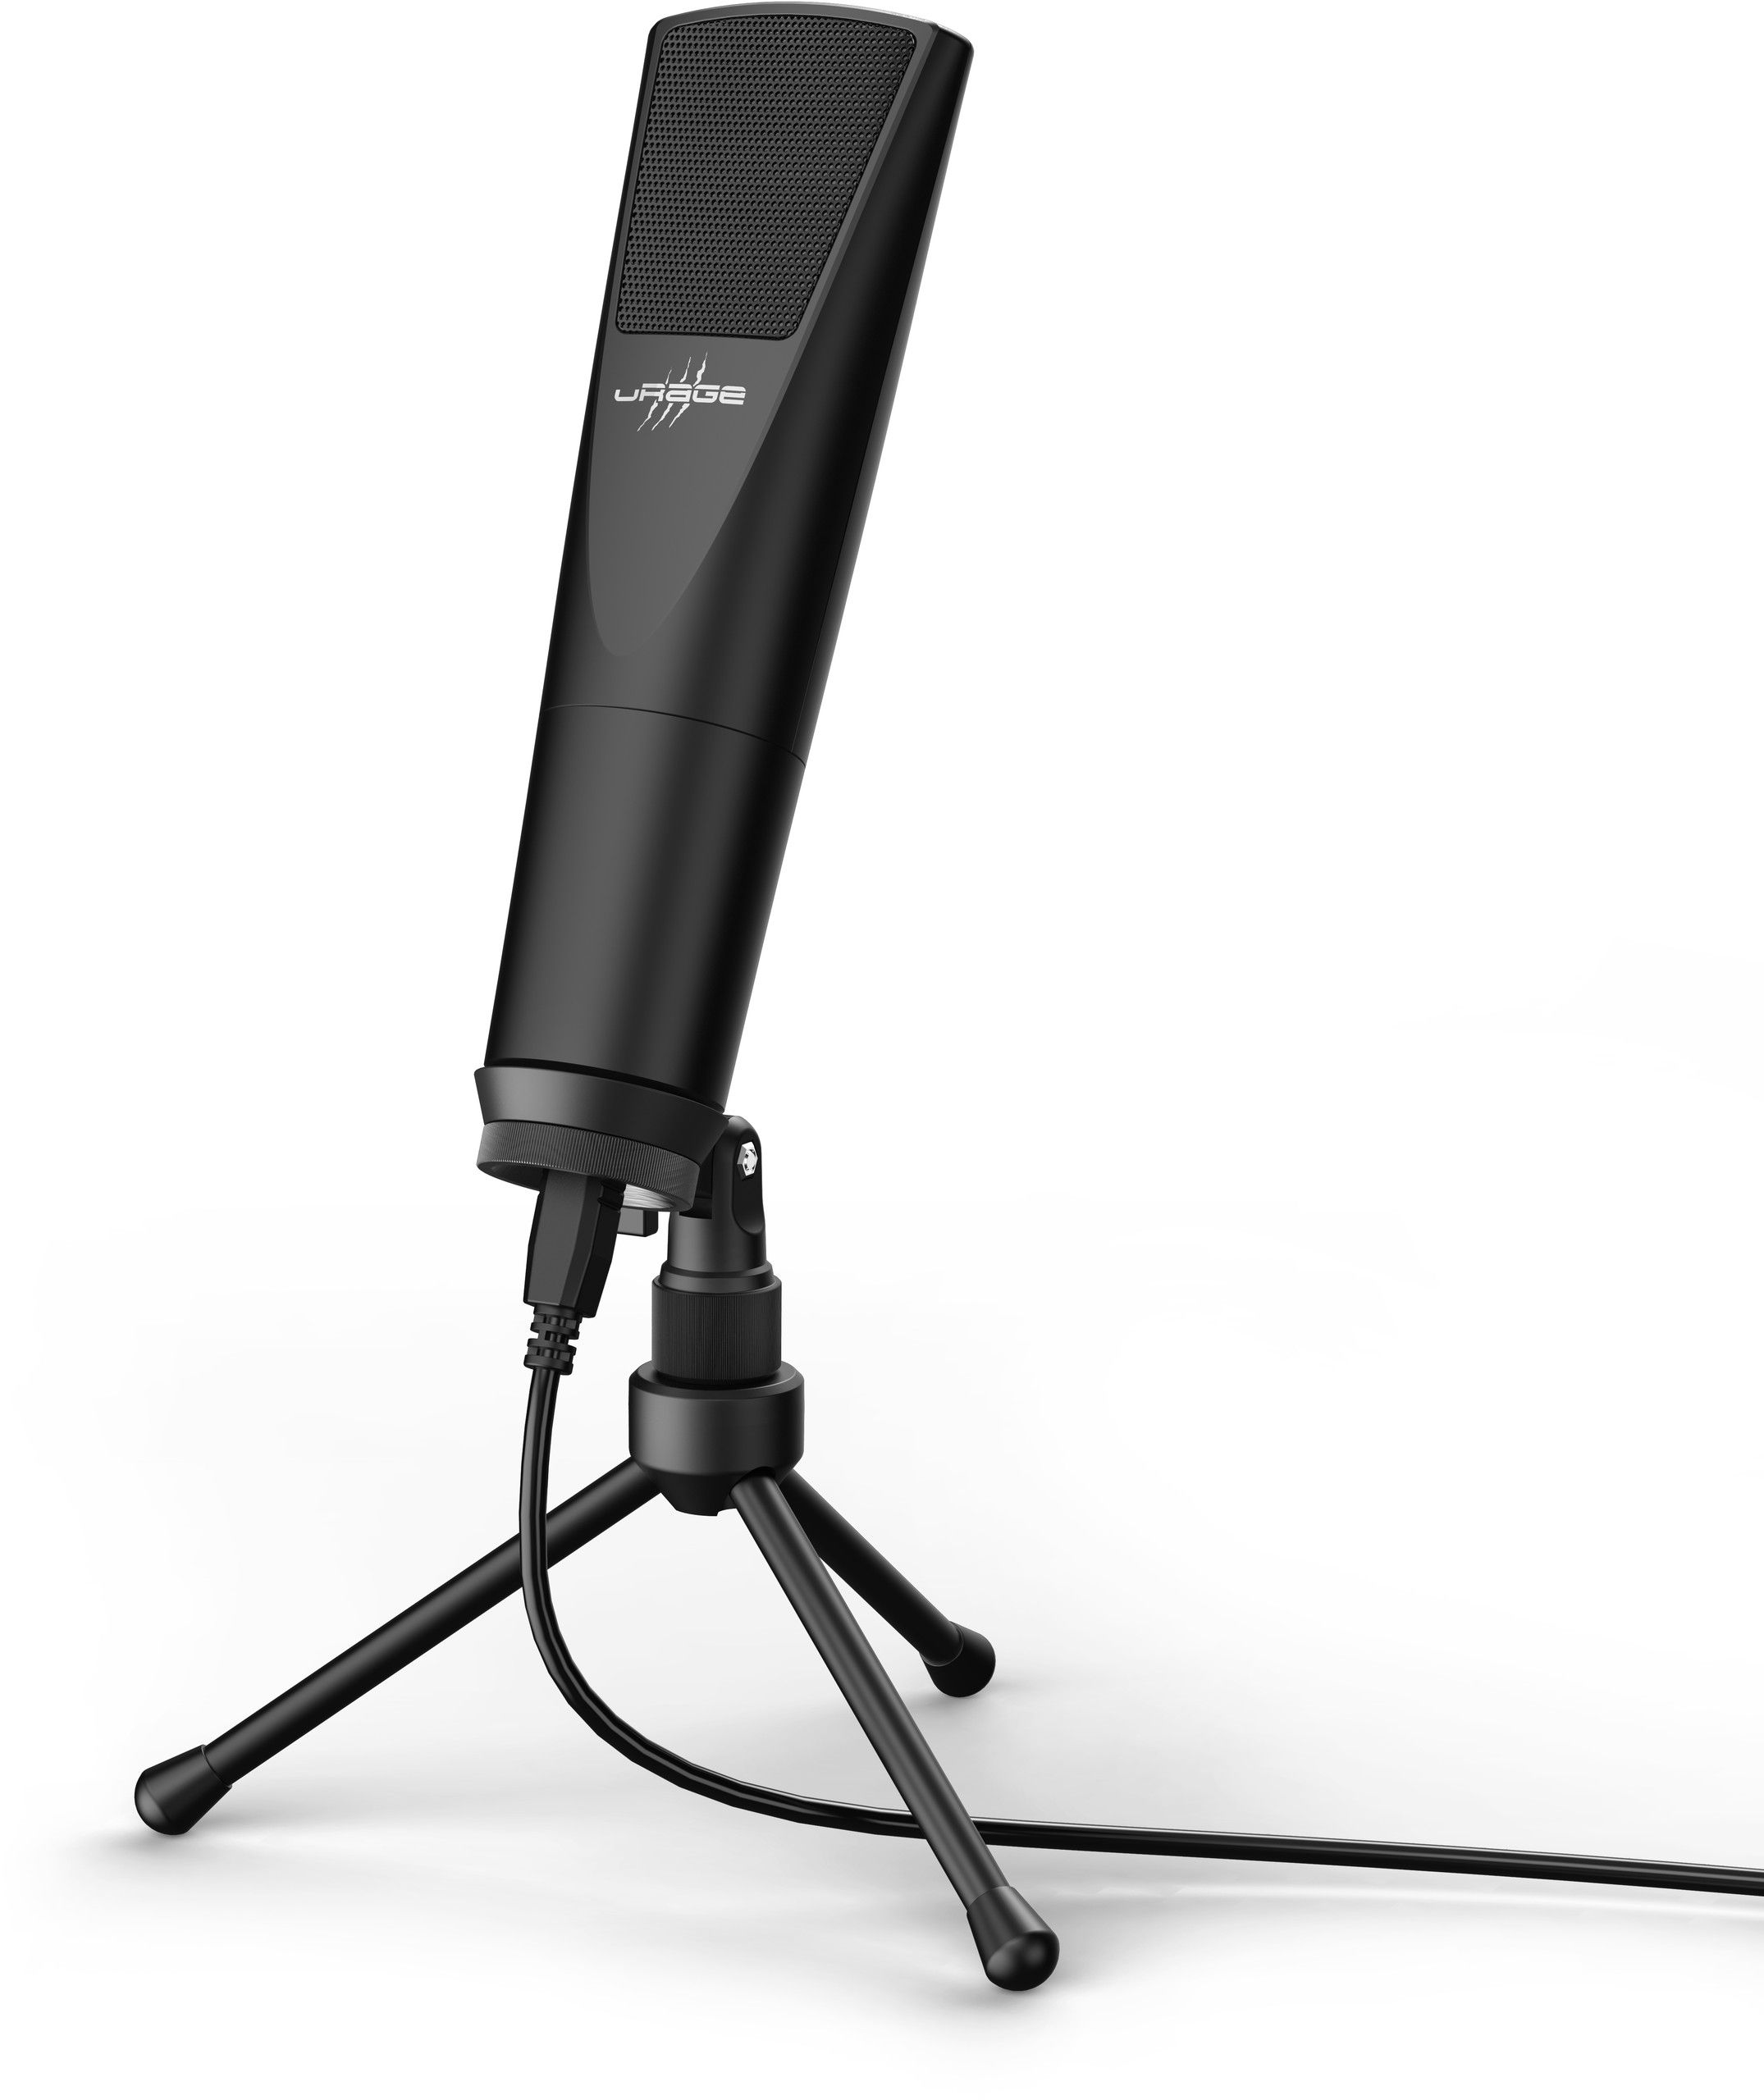 uRage 800 HD Studio Streaming Microphone